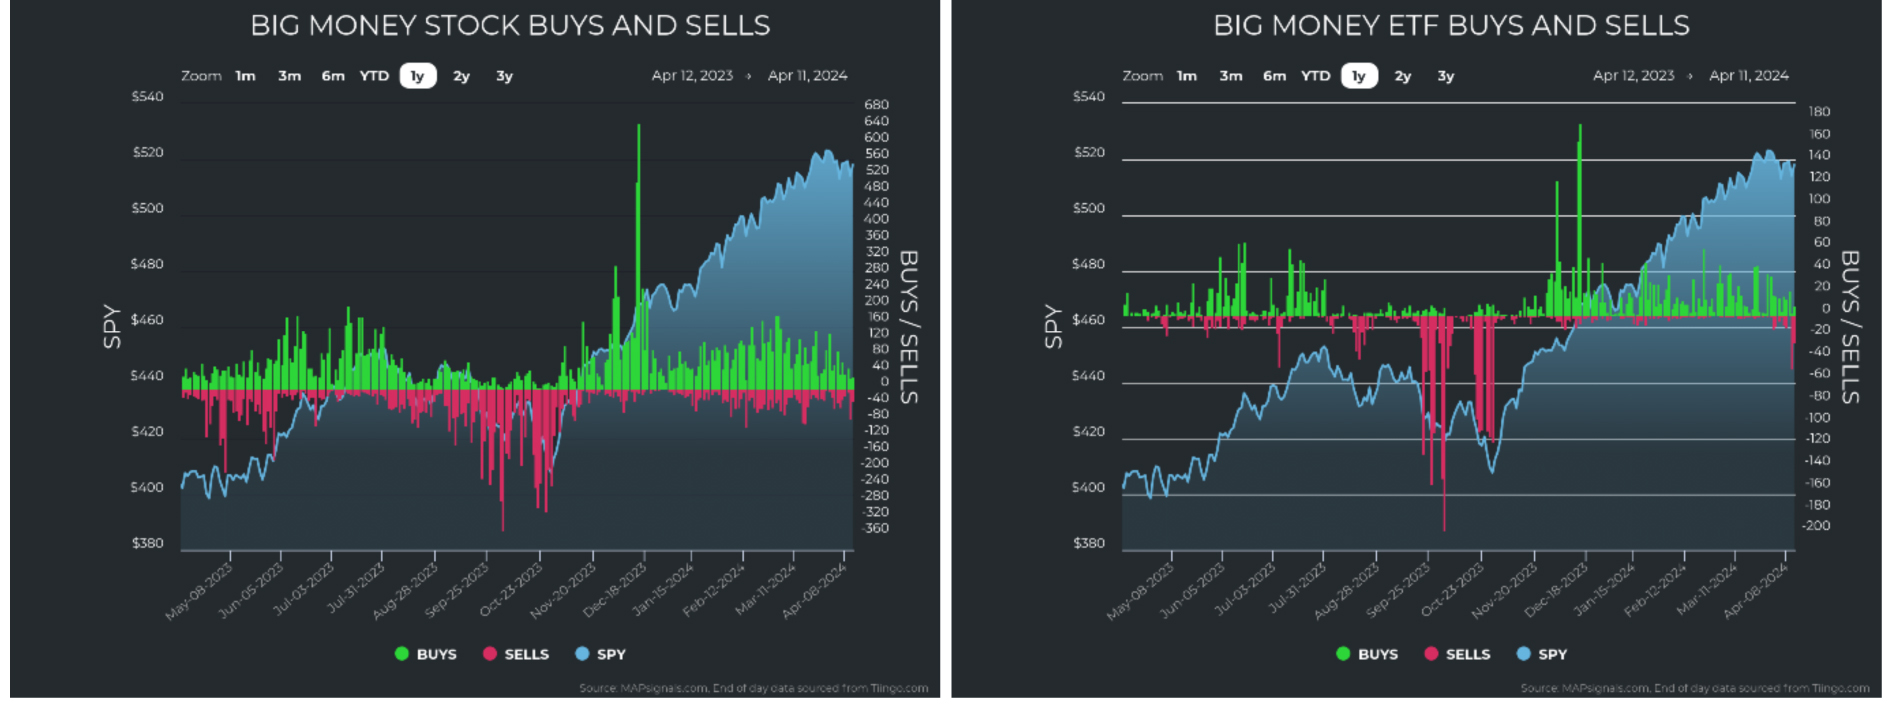 Big-Money-Stock-ETF-Charts.